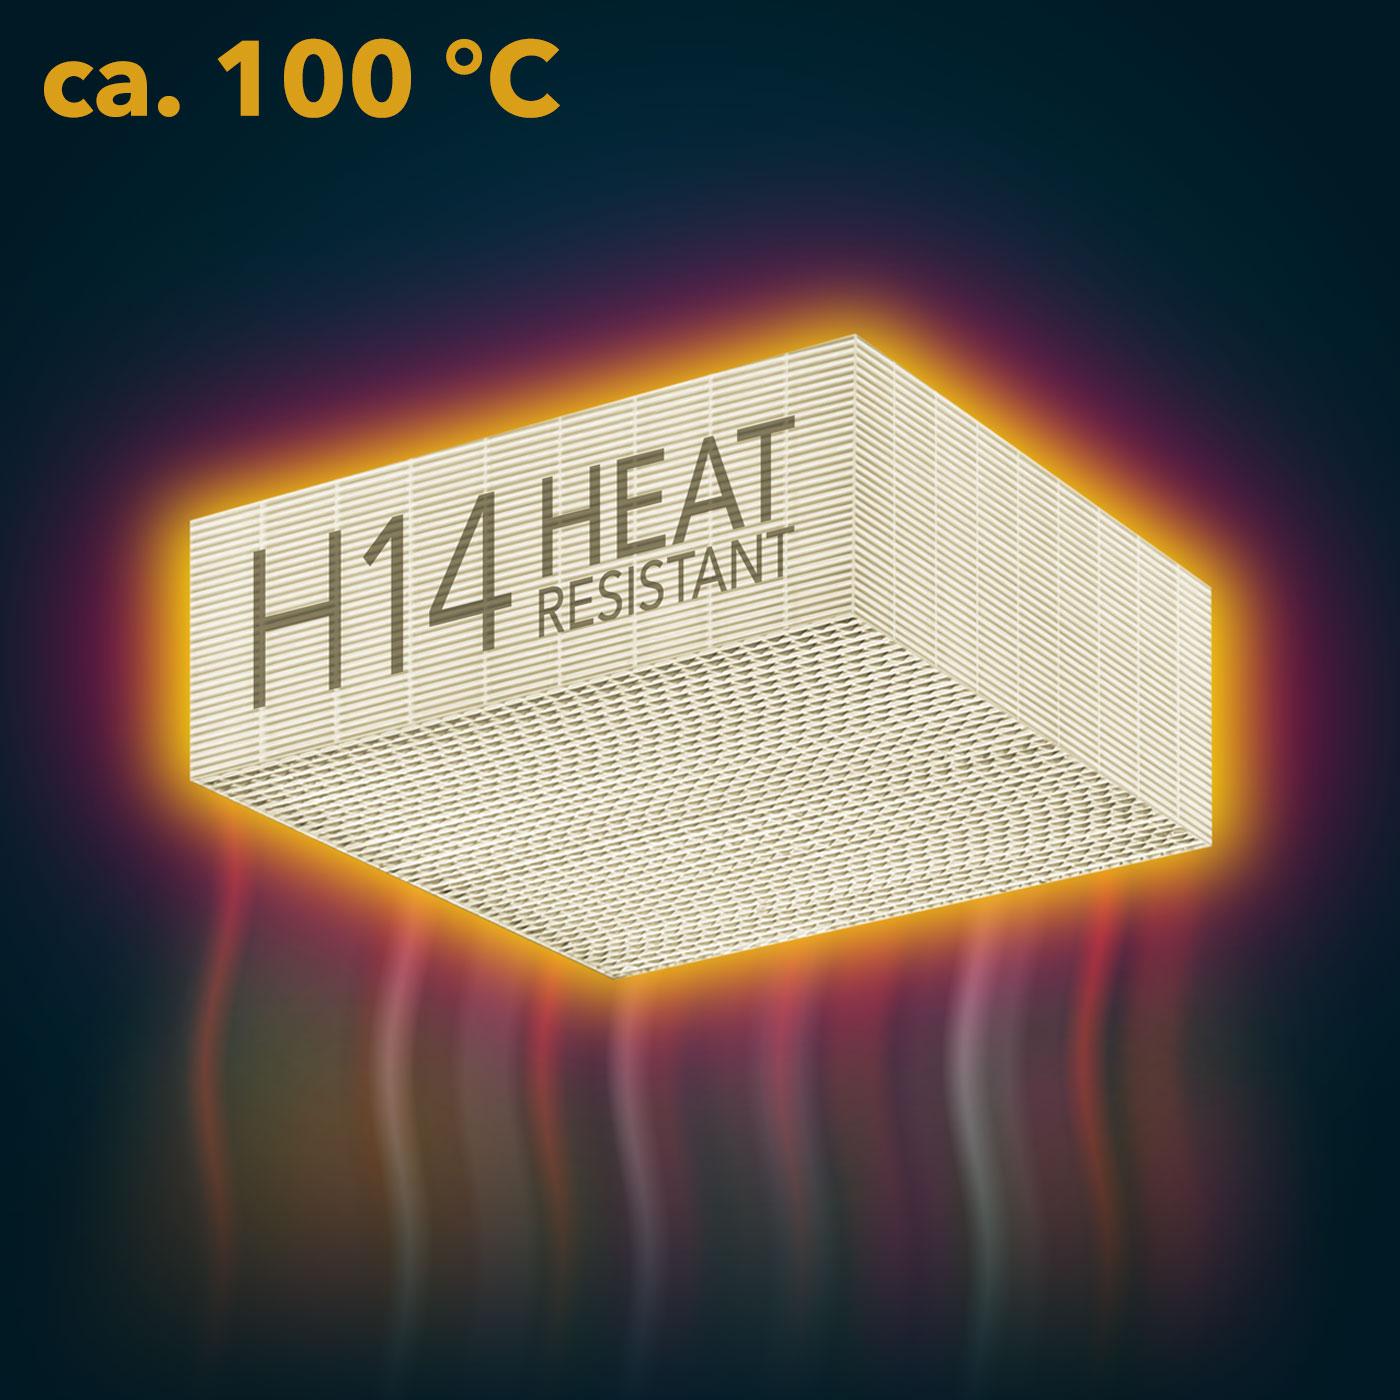 Dekontaminacija toplinskim filterom i regeneracija toplinskog filtra - ekskluzivno za Trotec